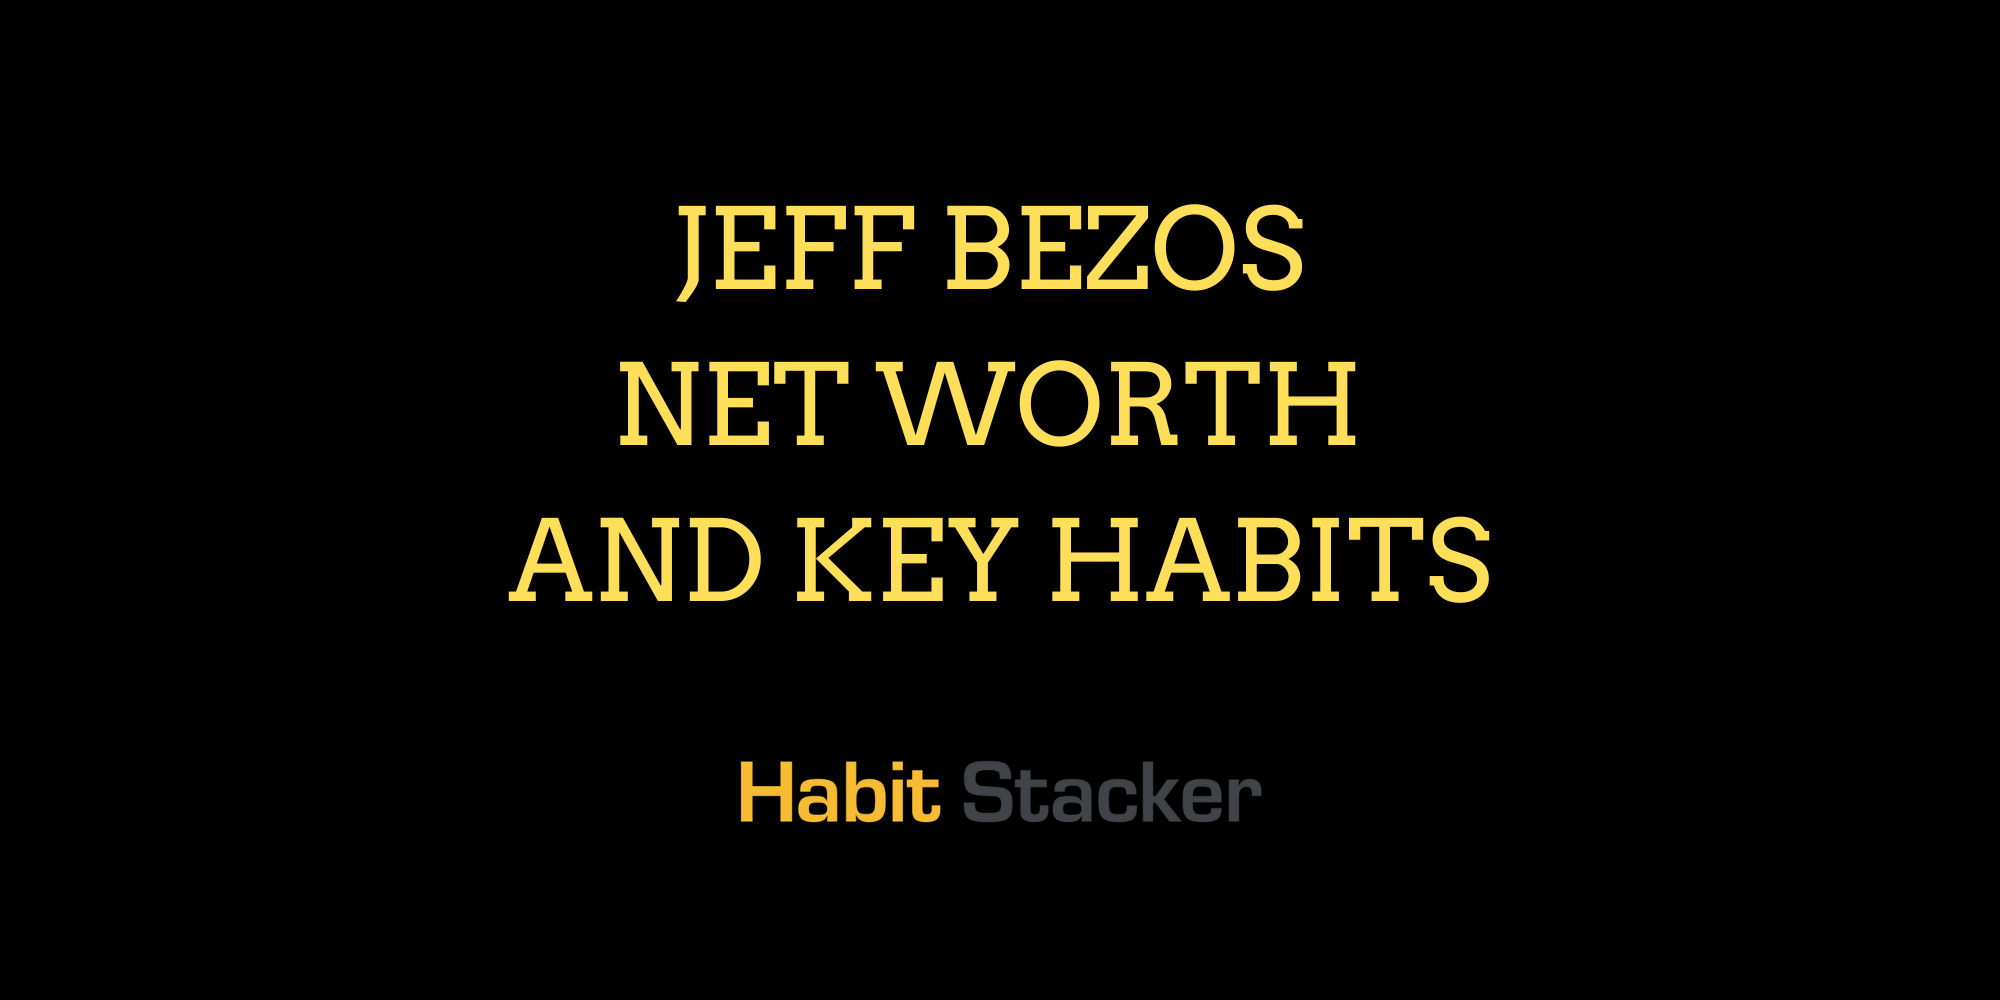 Jeff Bezos Net Worth and Key Habits